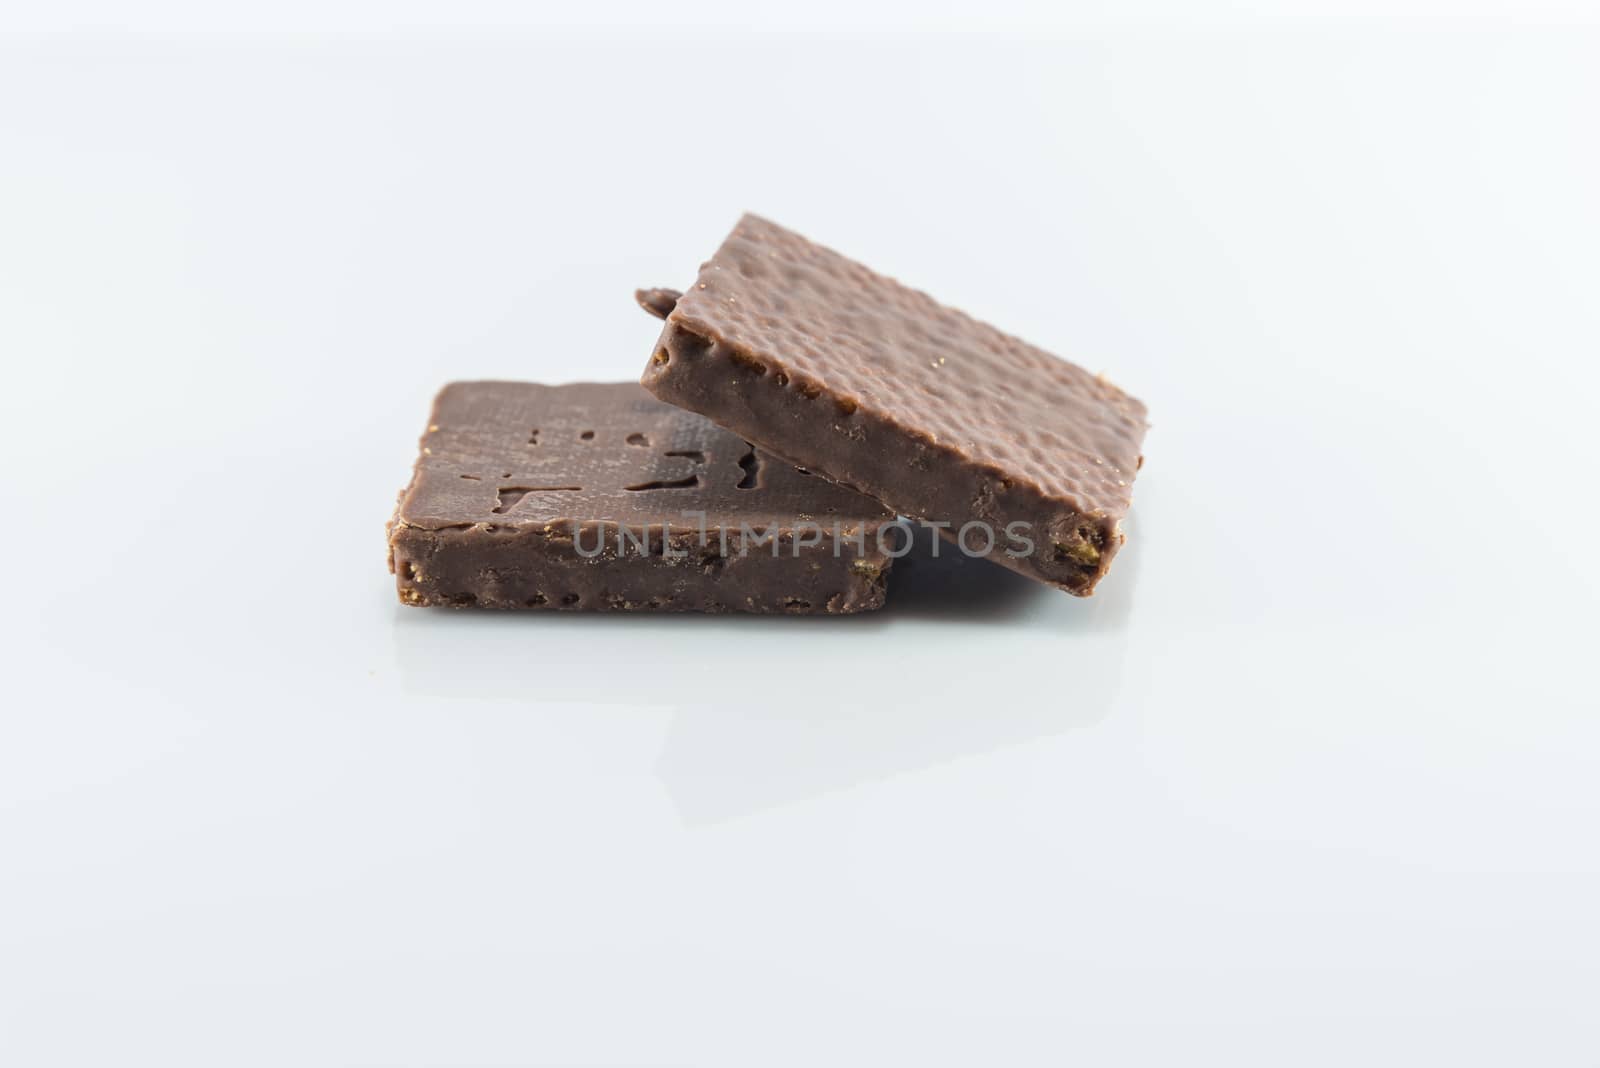 Snacks coated chocolate wafers on white background.